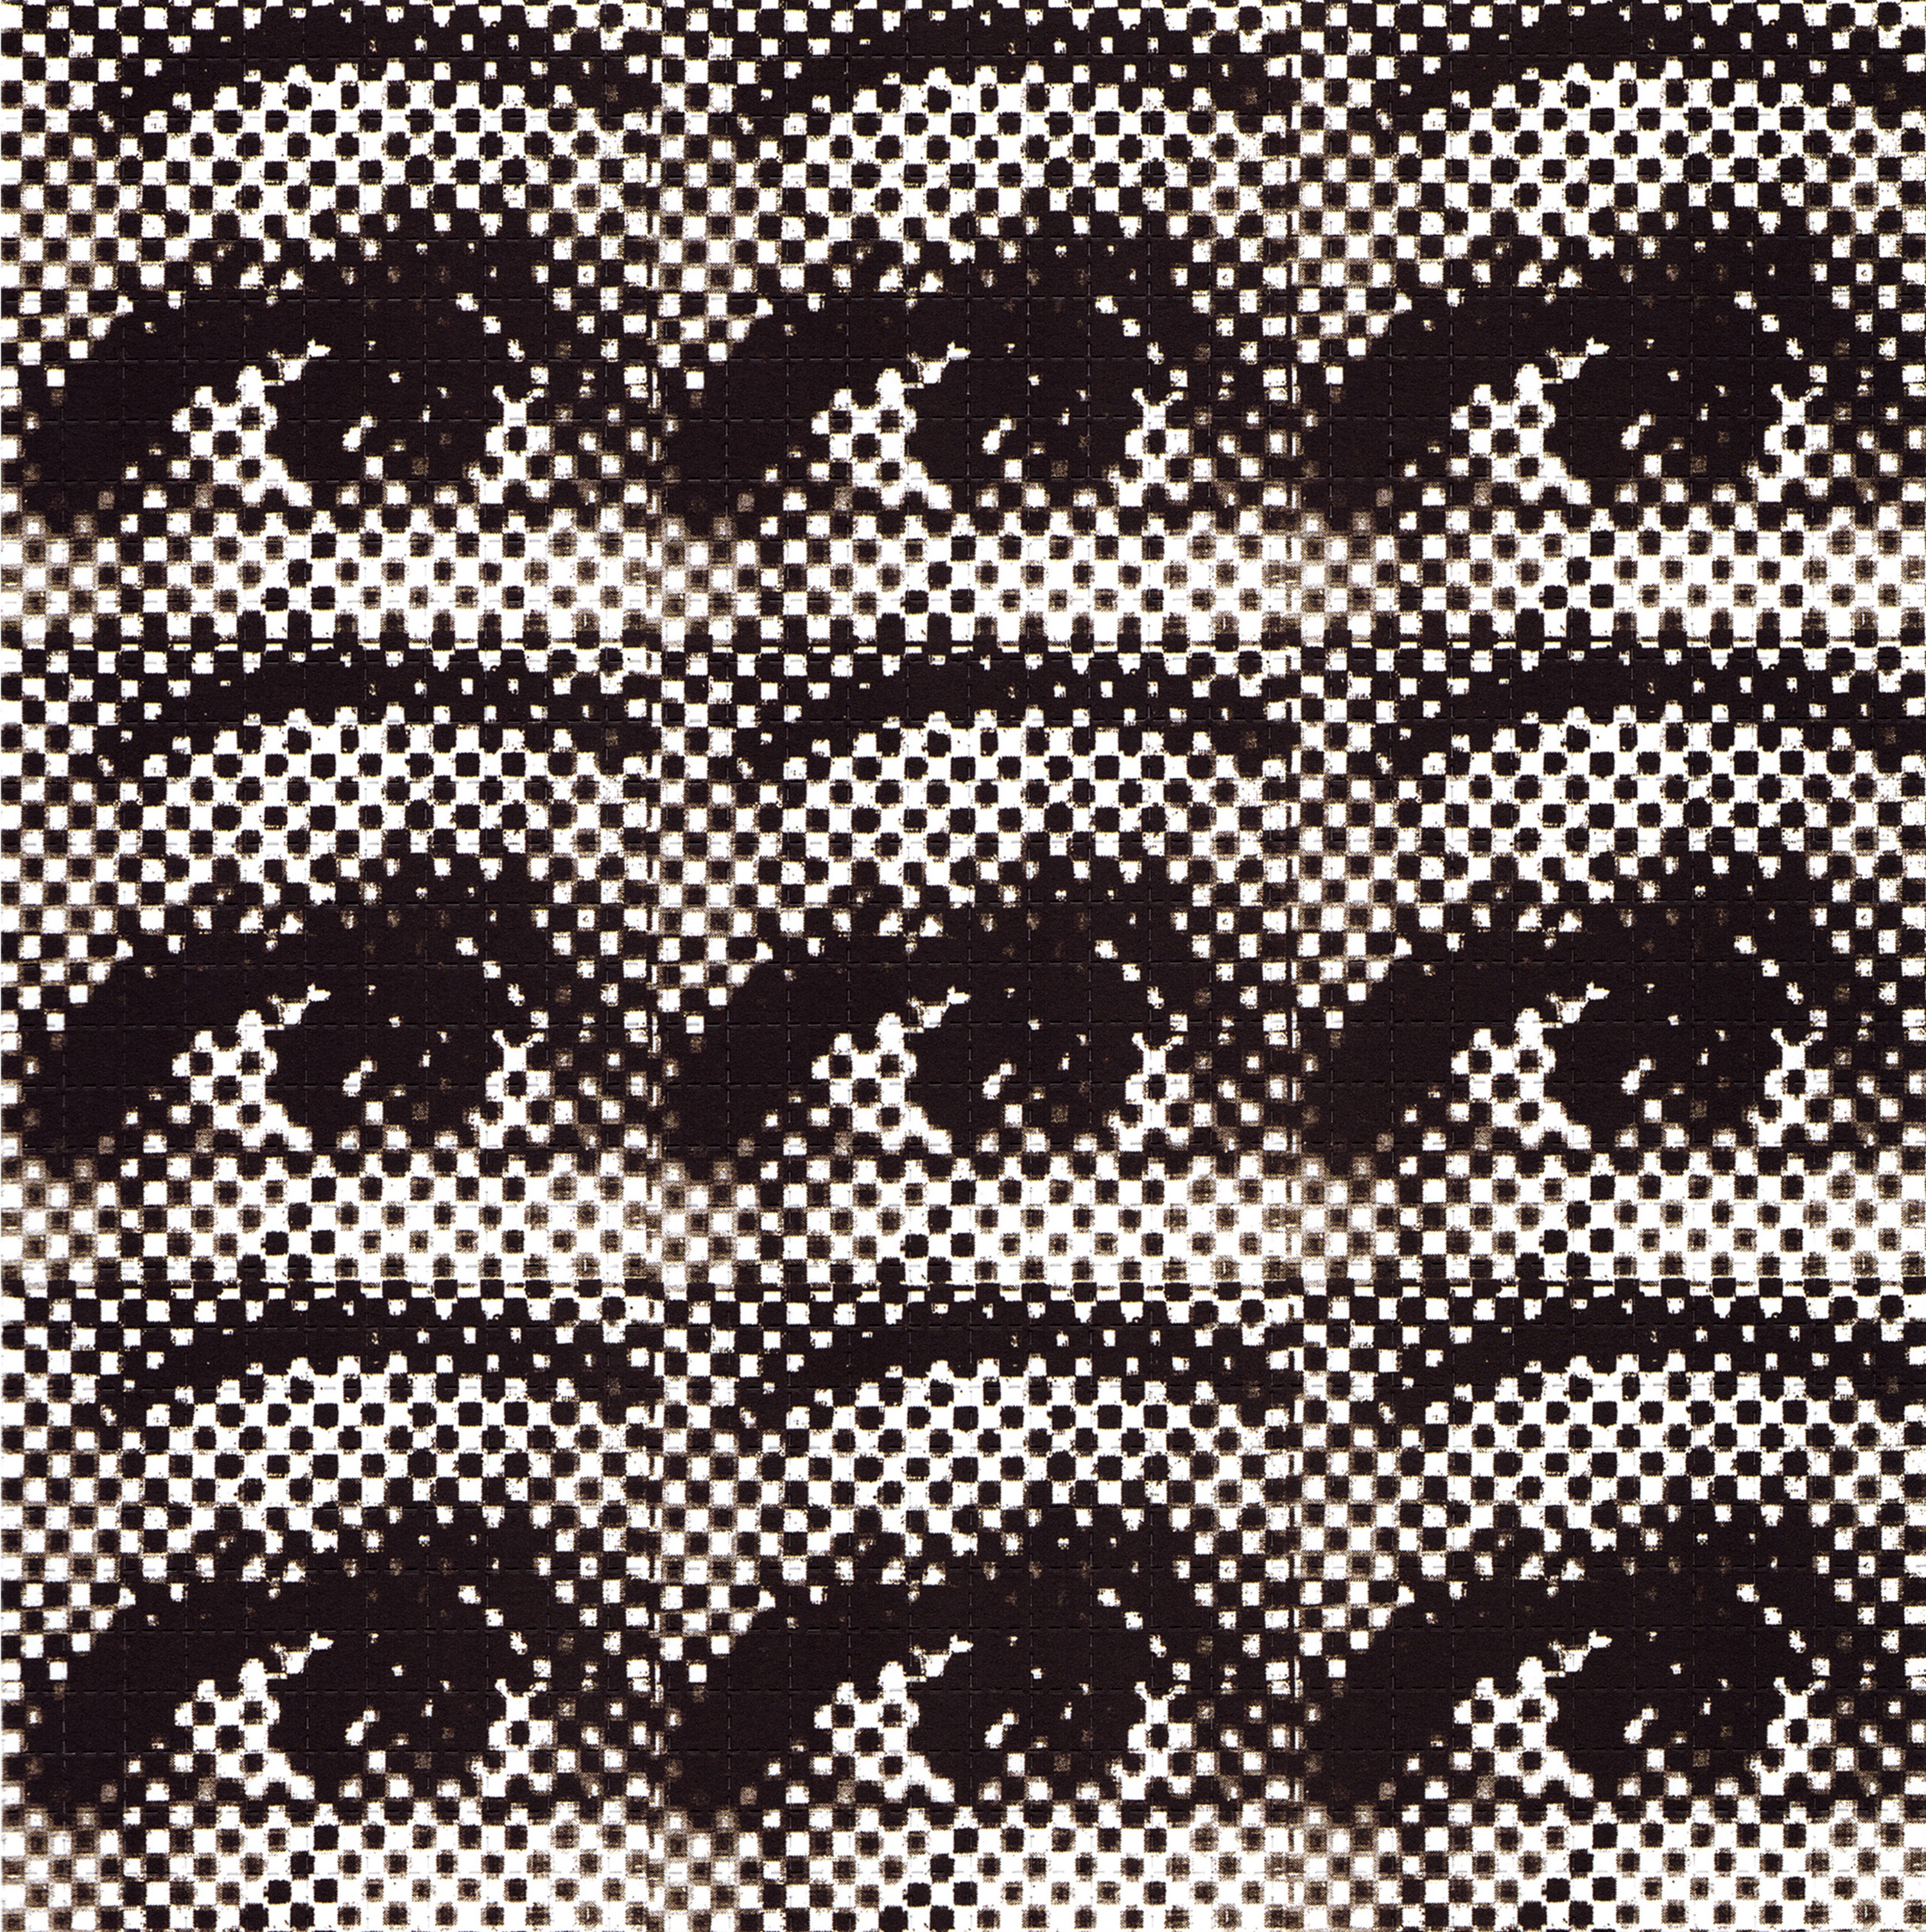 A scan of the LSD Blotter Art Print eyeandeye by Martin Atkins